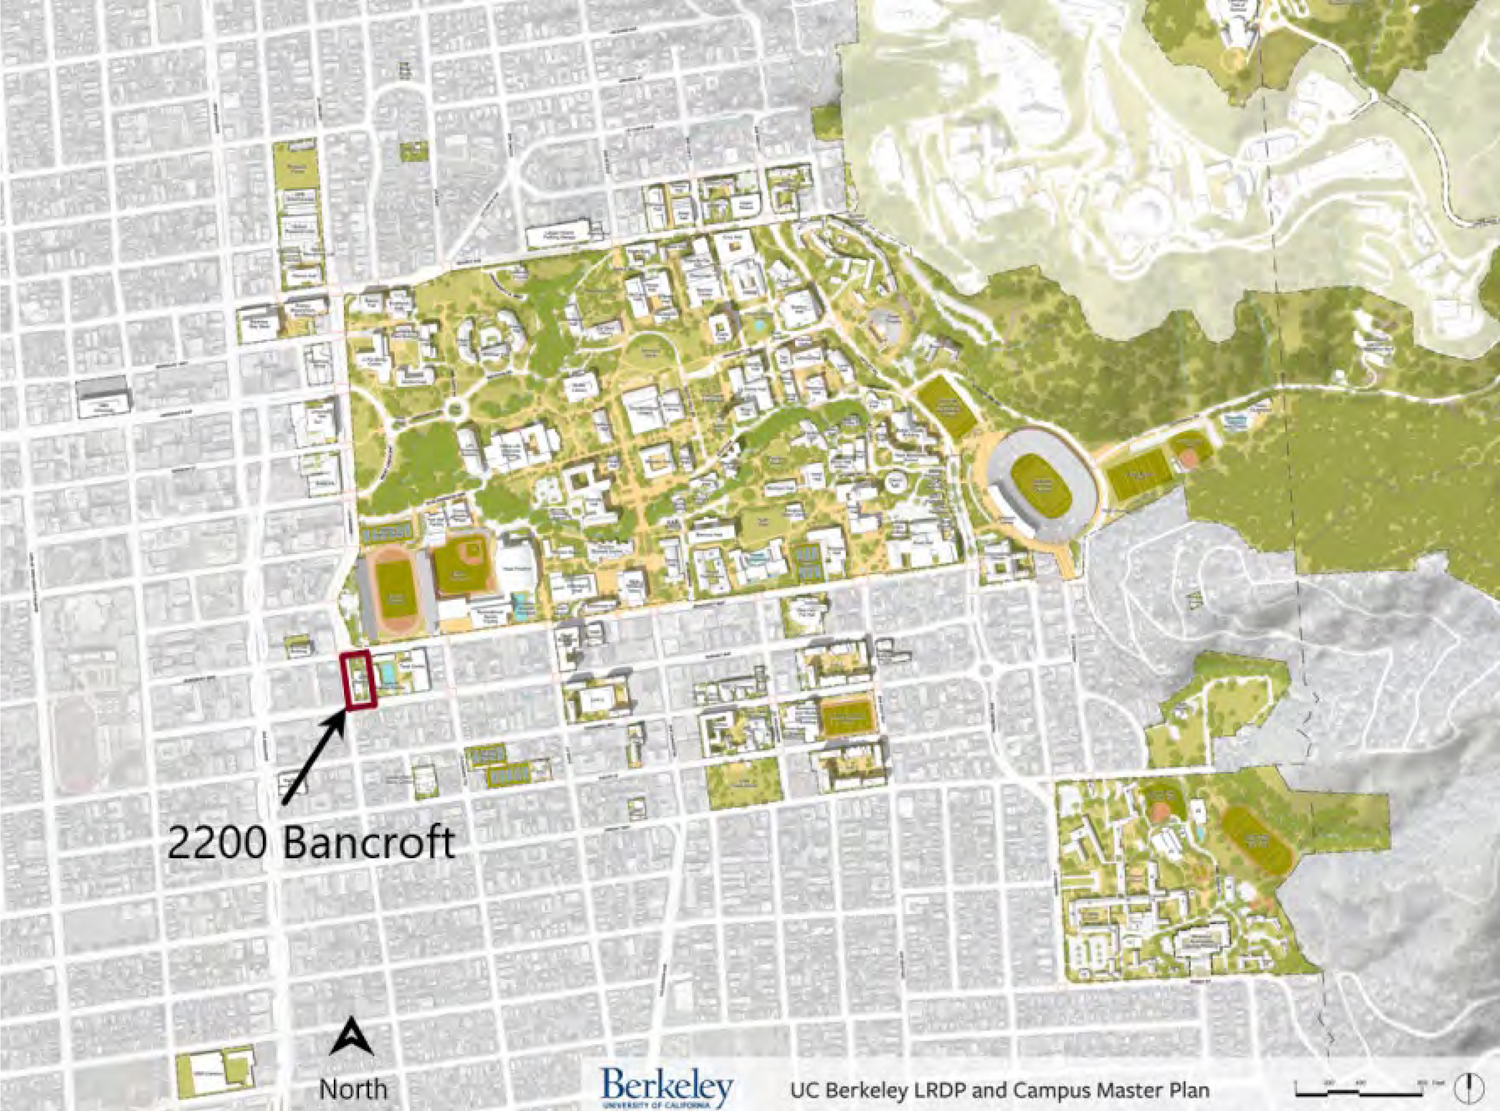 2200 Bancroft Way context map, image courtesy UC Berkeley campus master plan